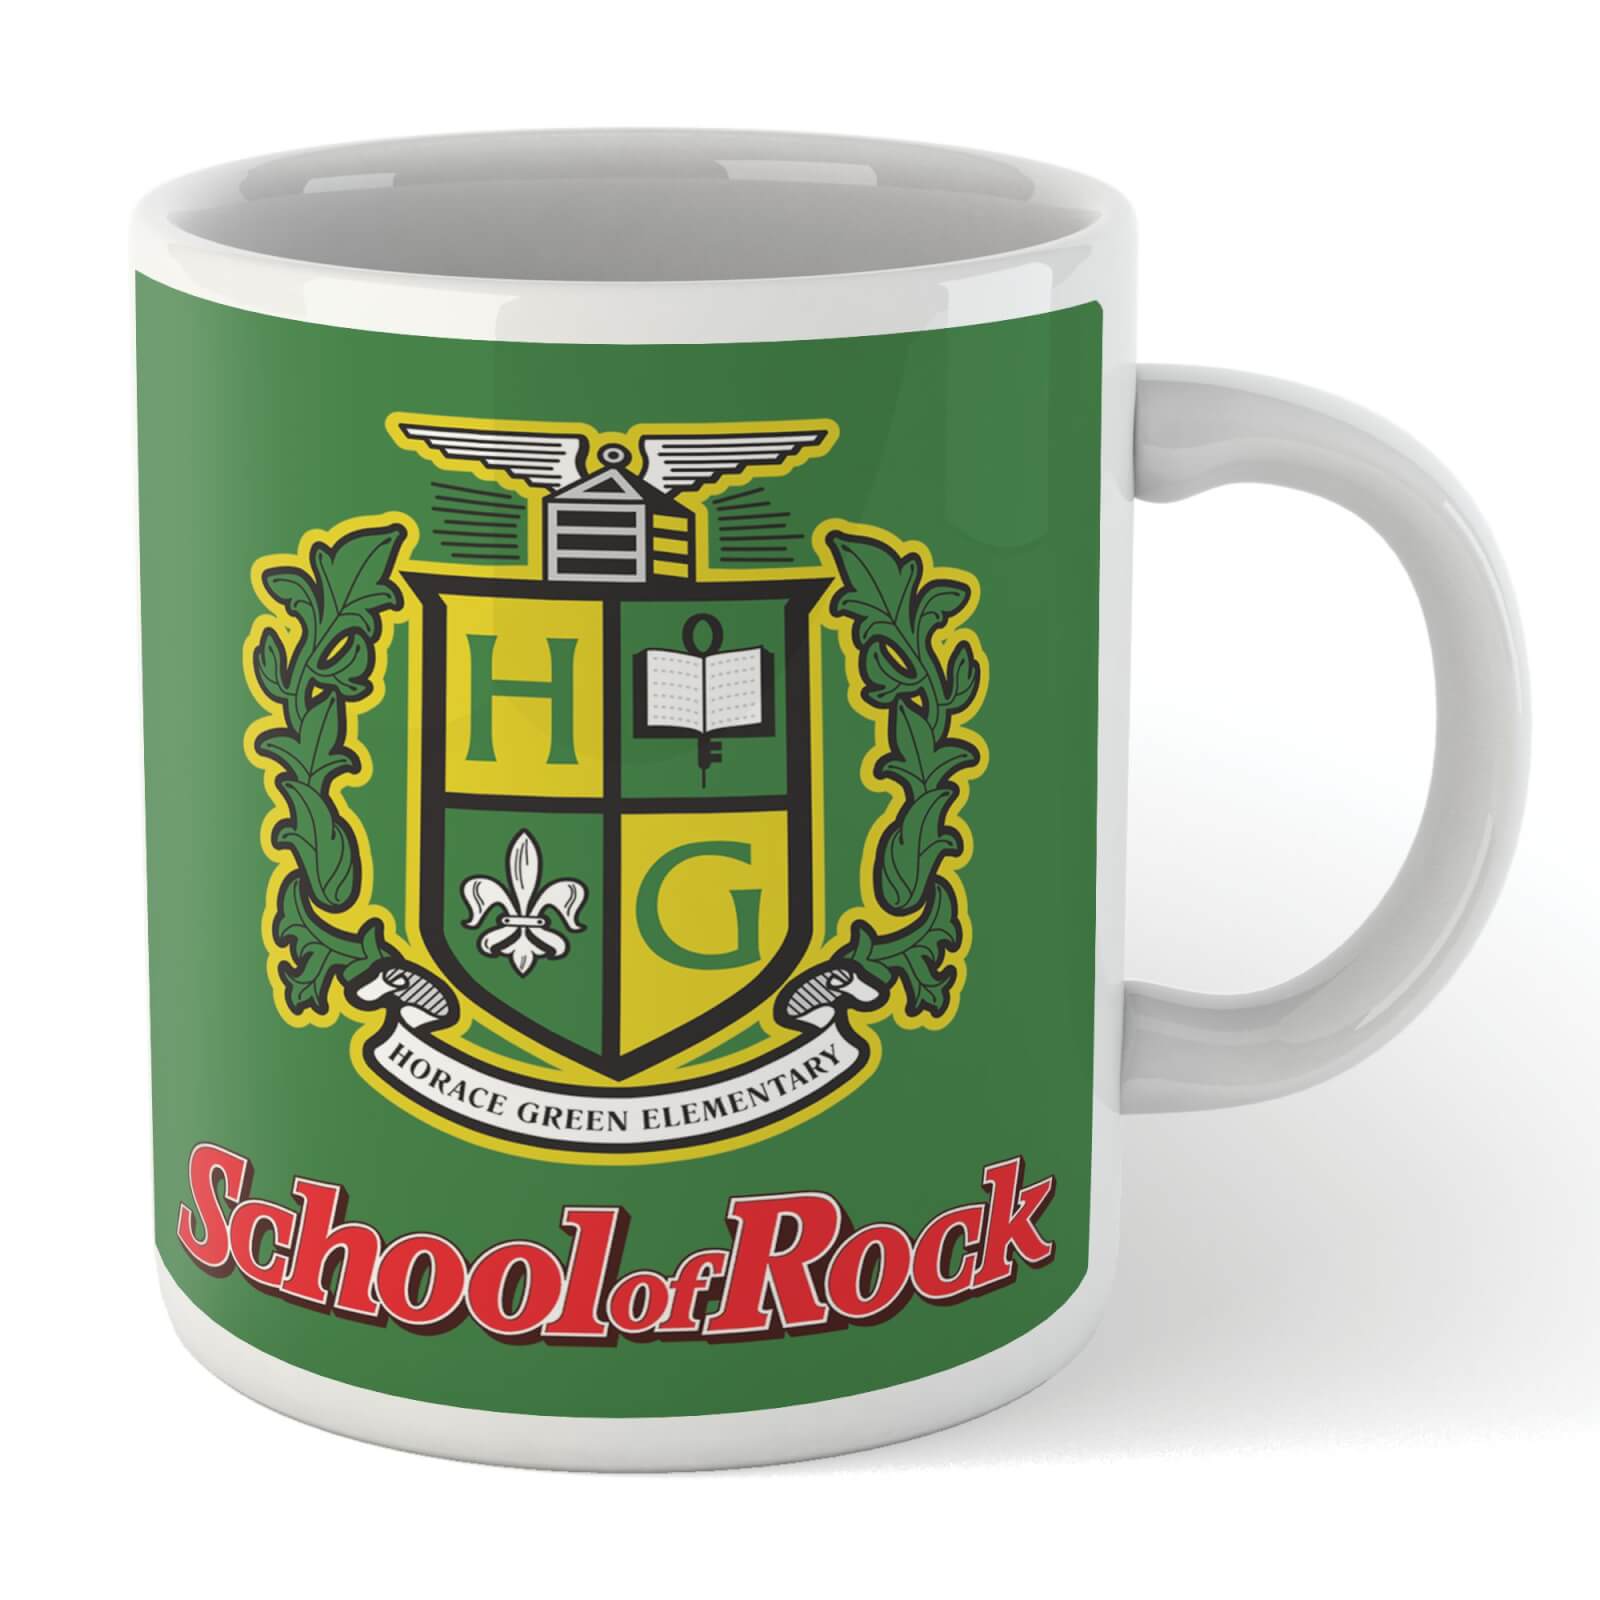 School of Rock Horace Green Mug